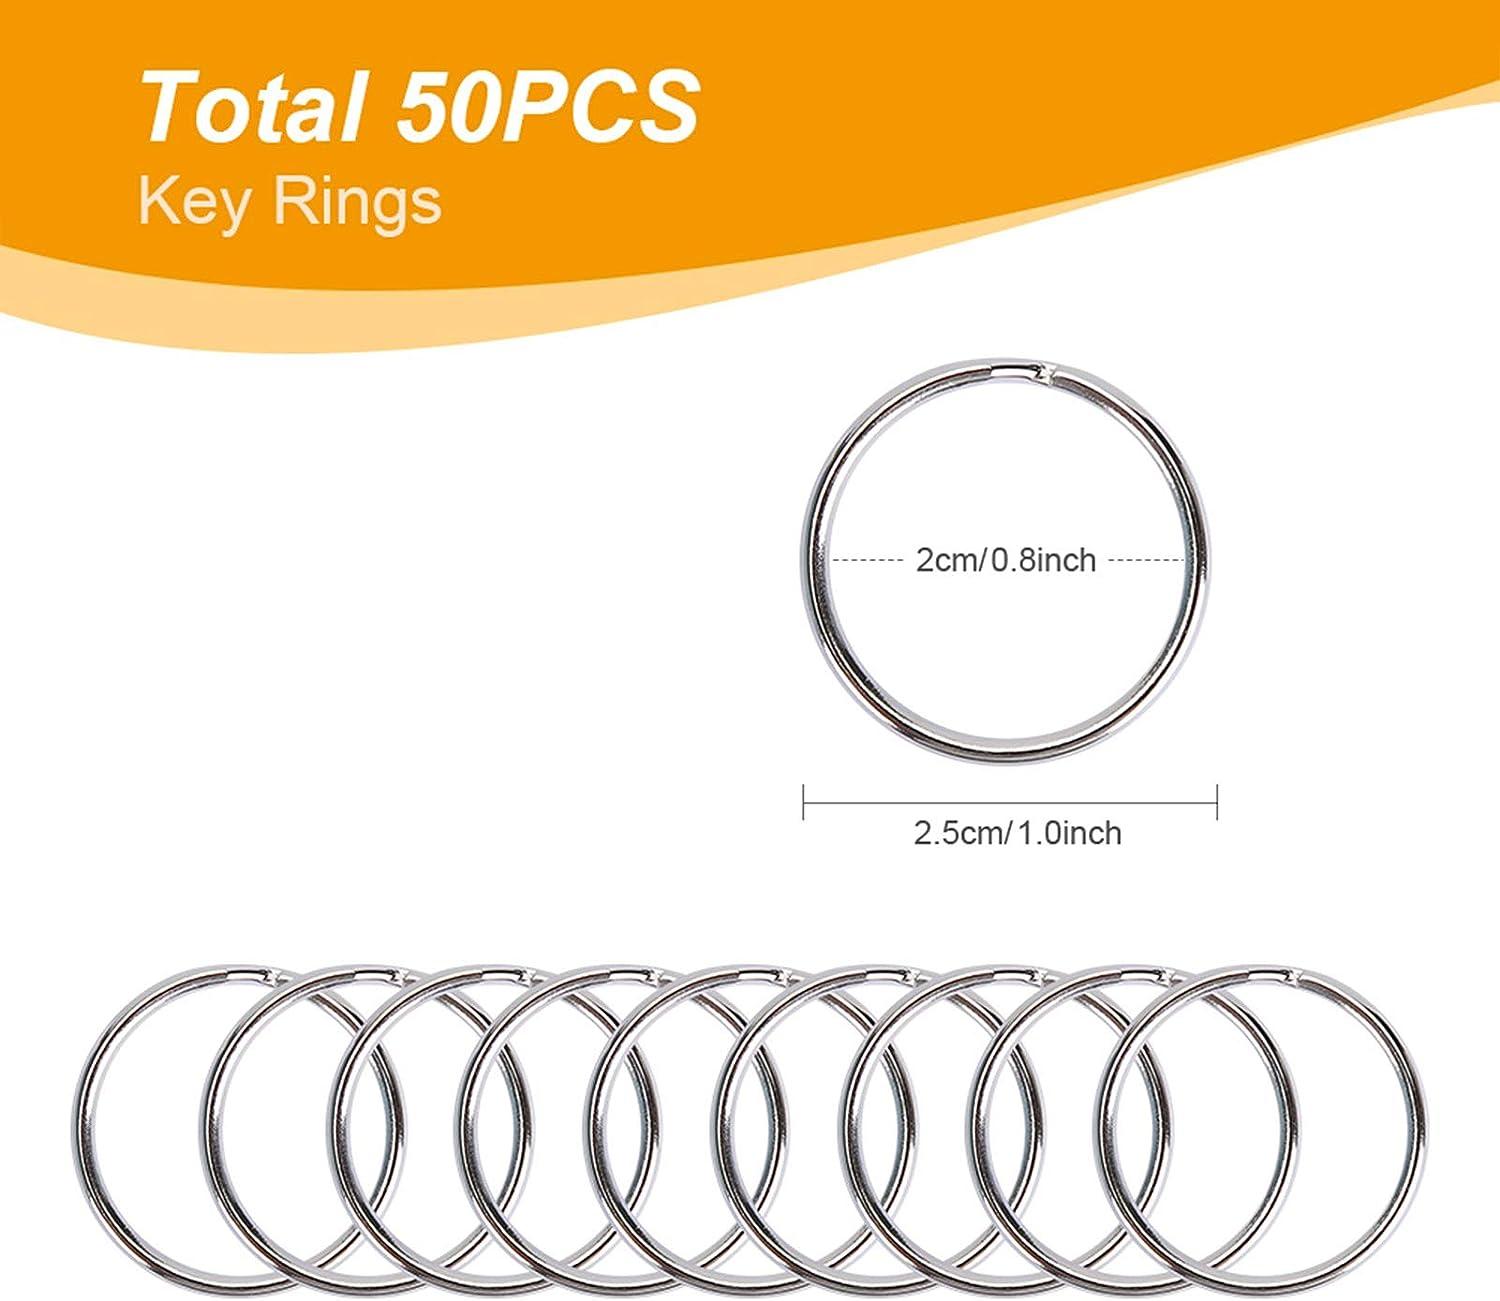 100PCS Swivel Snap Hooks with Key Rings, Premium Metal Swivel